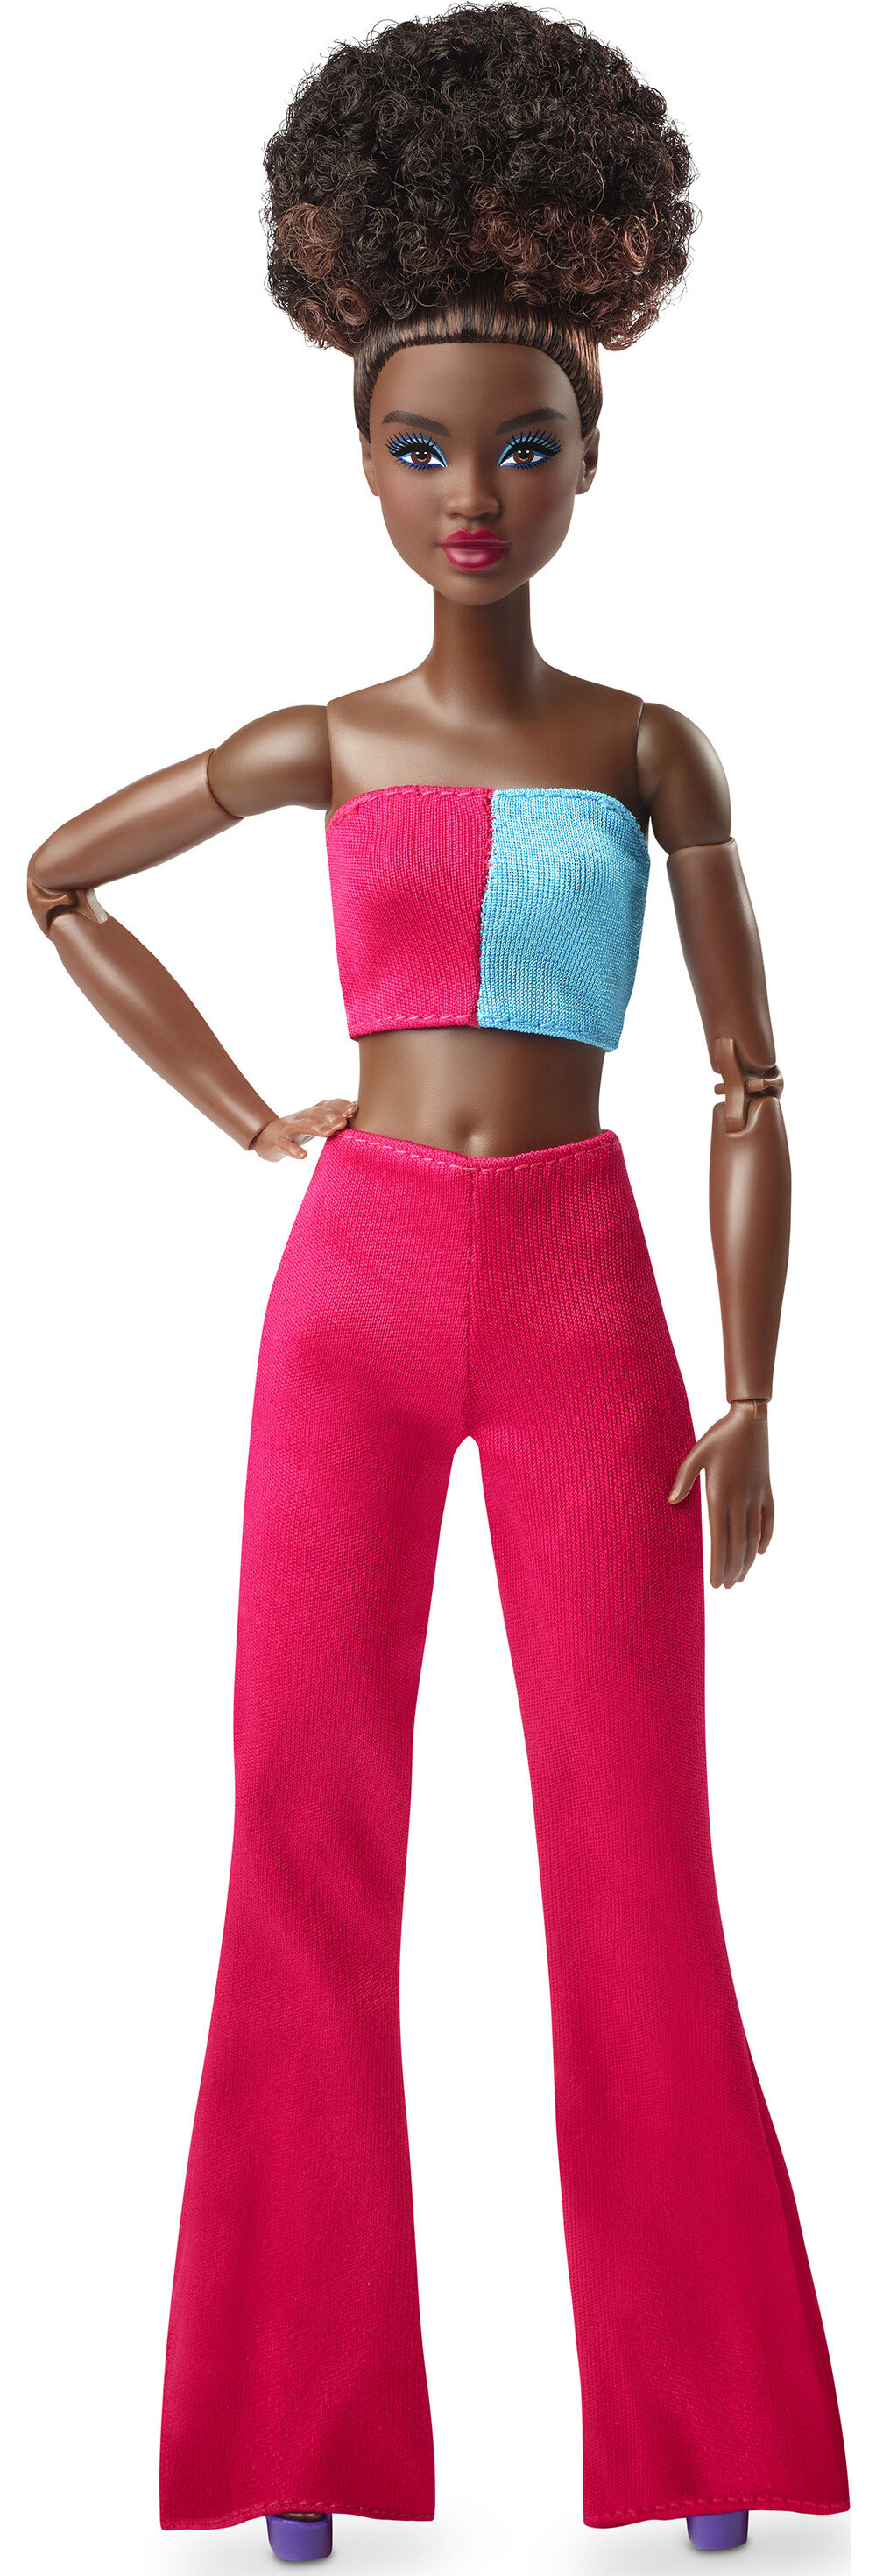 Barbie Looks Doll, Natural Black Hair, Color Block Crop Top